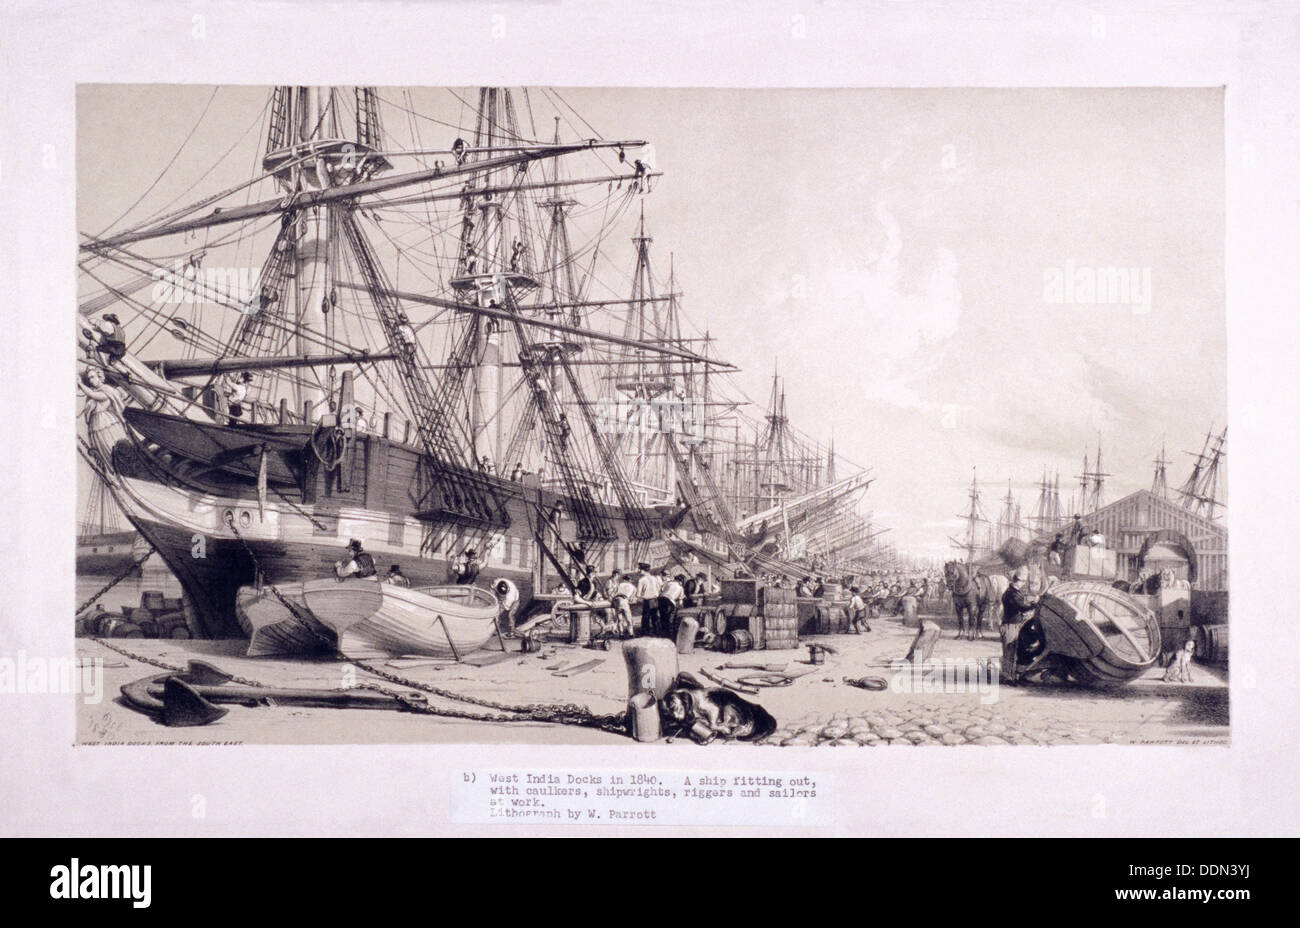 West India Docks, pioppo, Londra, 1830. Artista: William Parrott Foto Stock